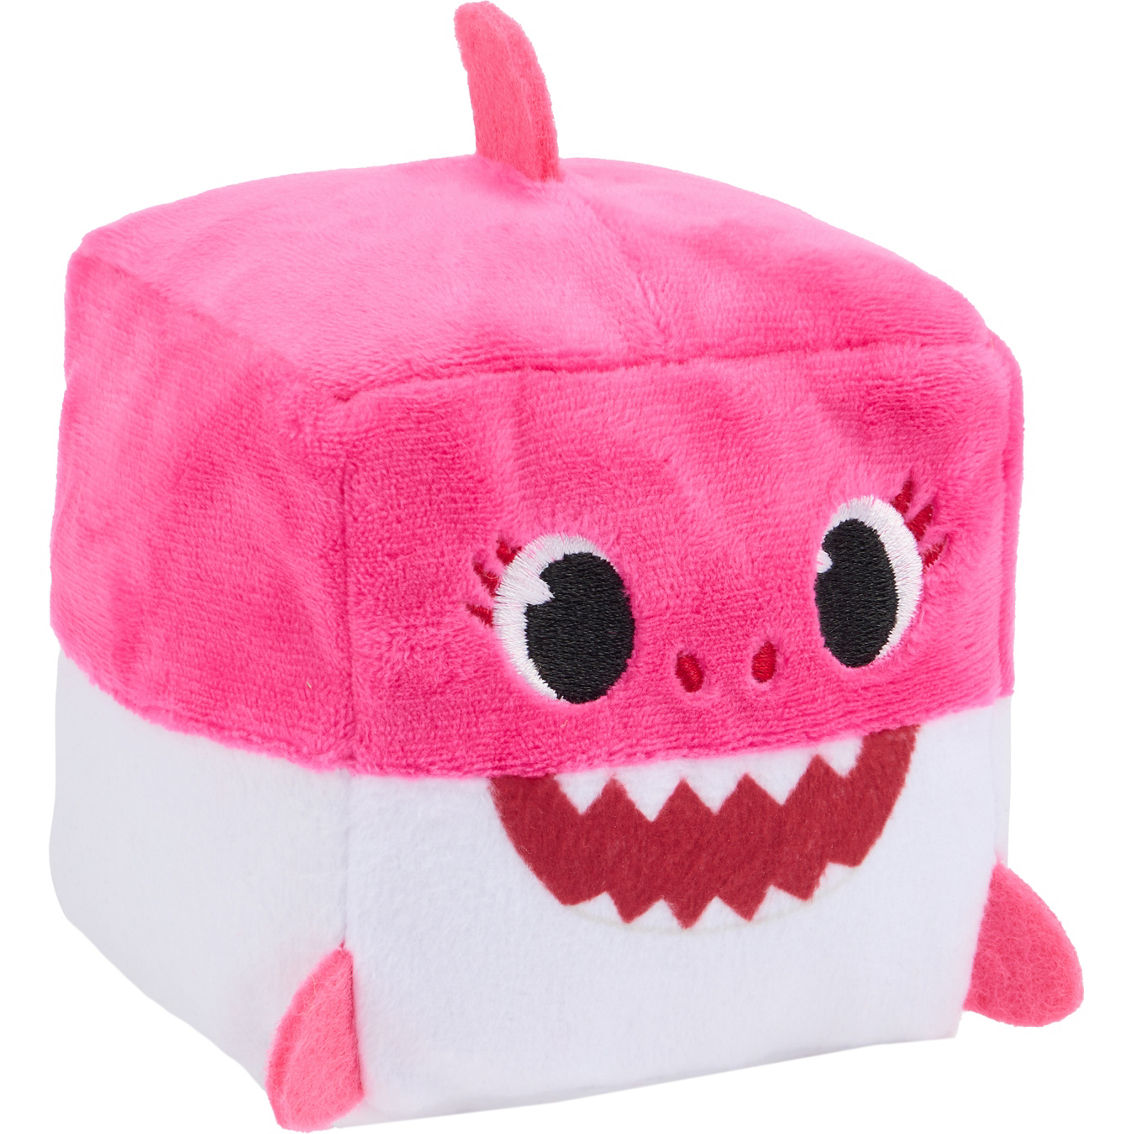 Baby Shark Plush Cube Character Nesting Dolls | Music & Sound | Baby ...